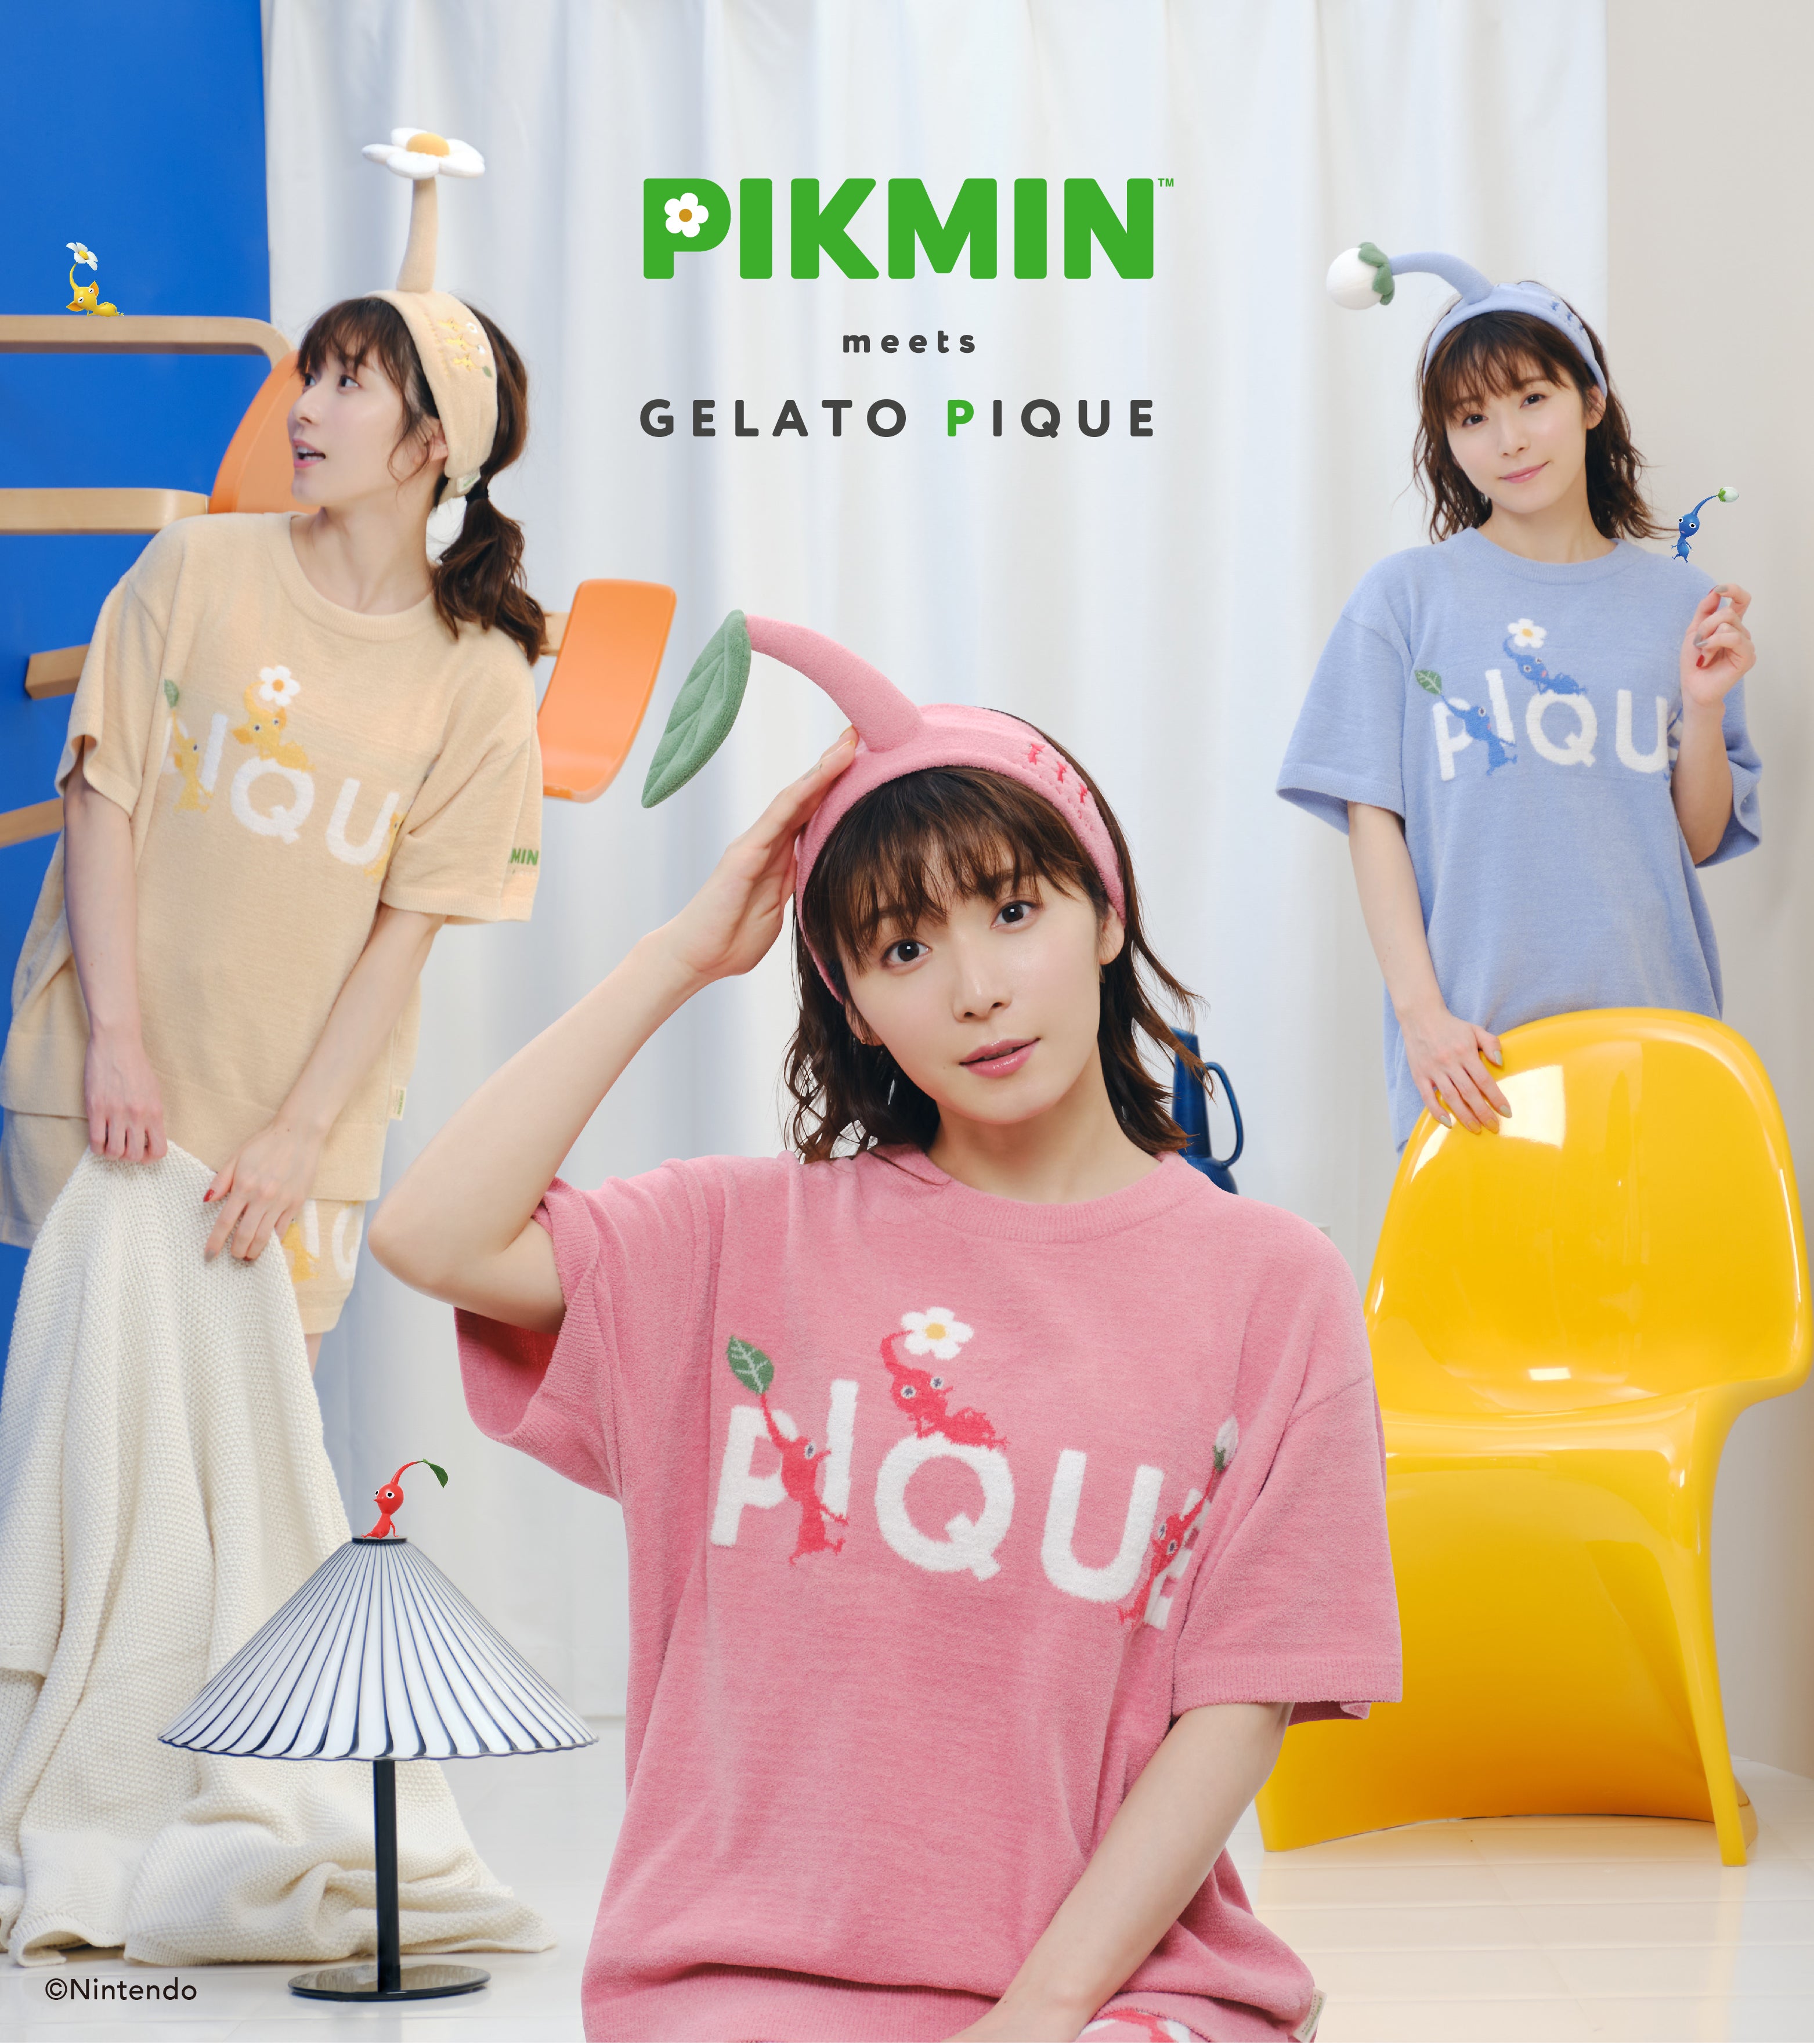 Gelato Pique - Japanese Luxury Loungewear, Sleepwear, Pajamas & More!